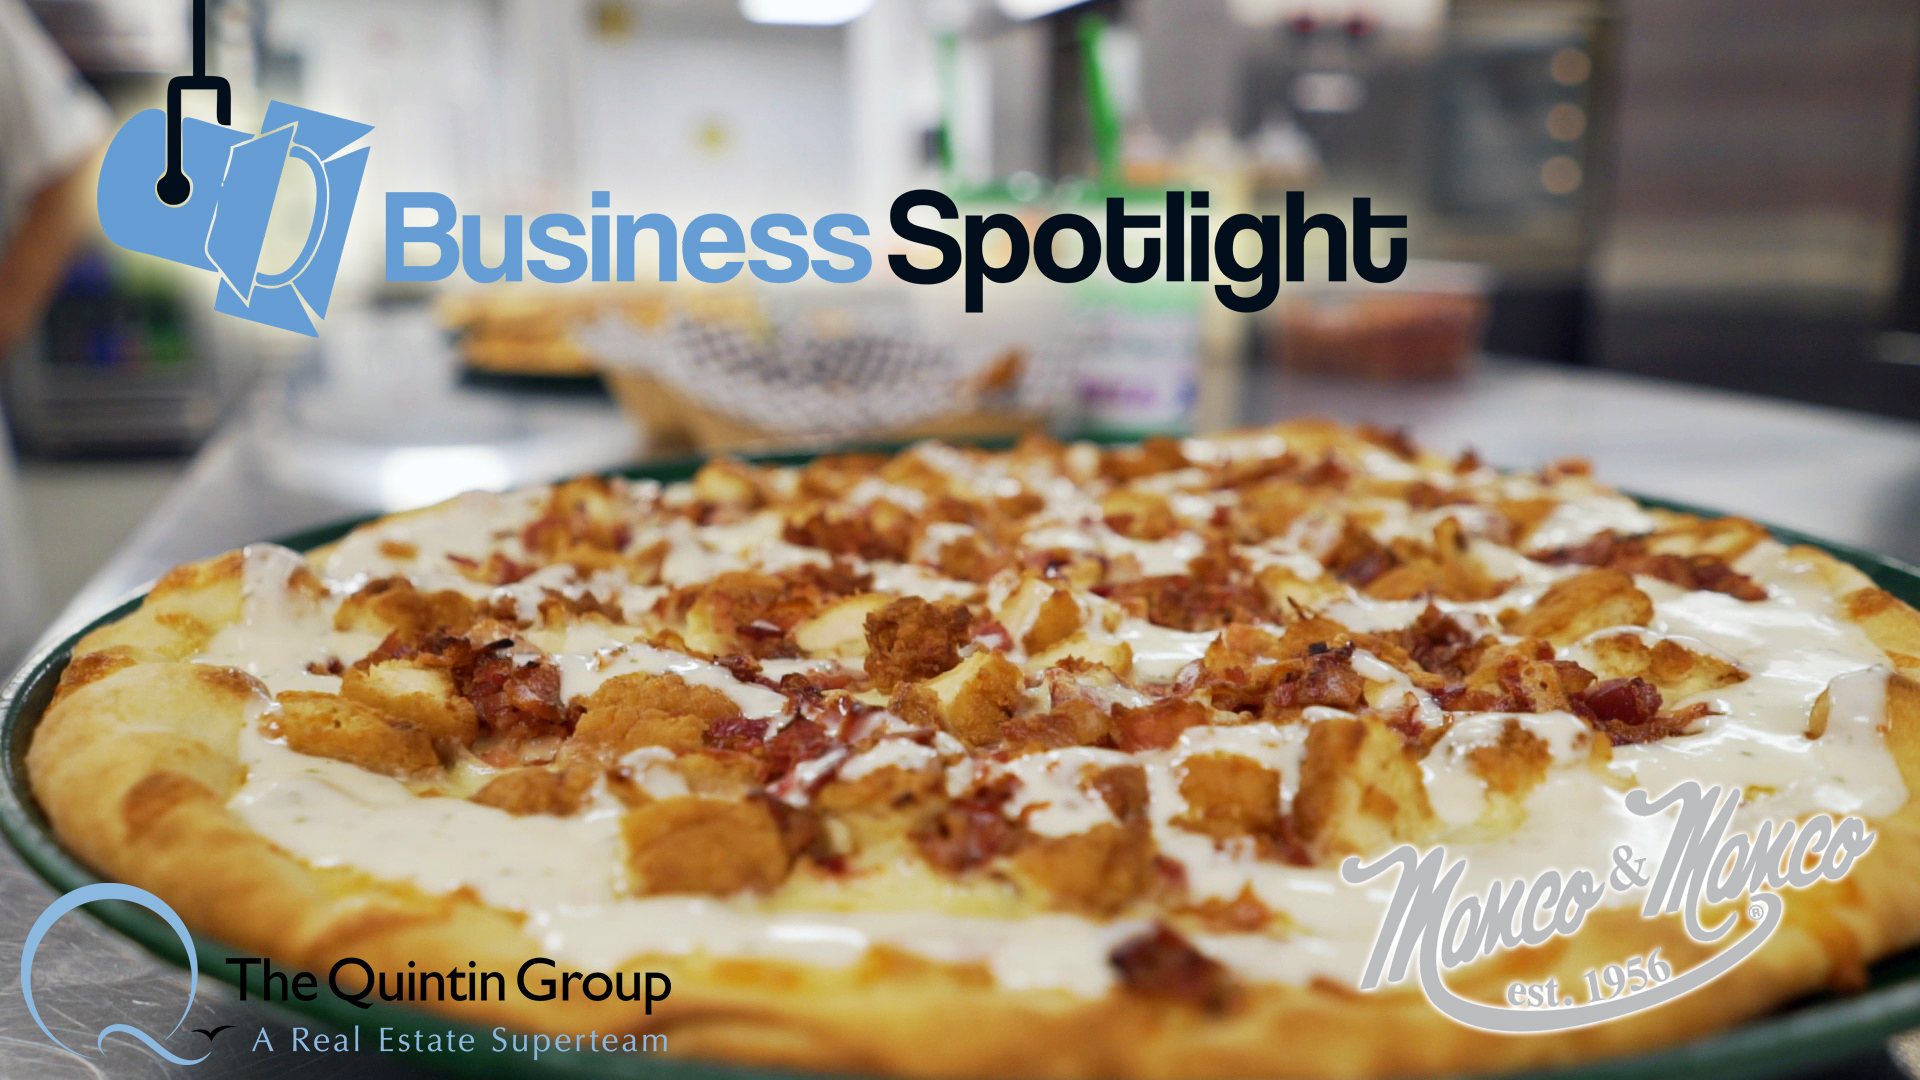 Business Spotlight: Manco & Manco